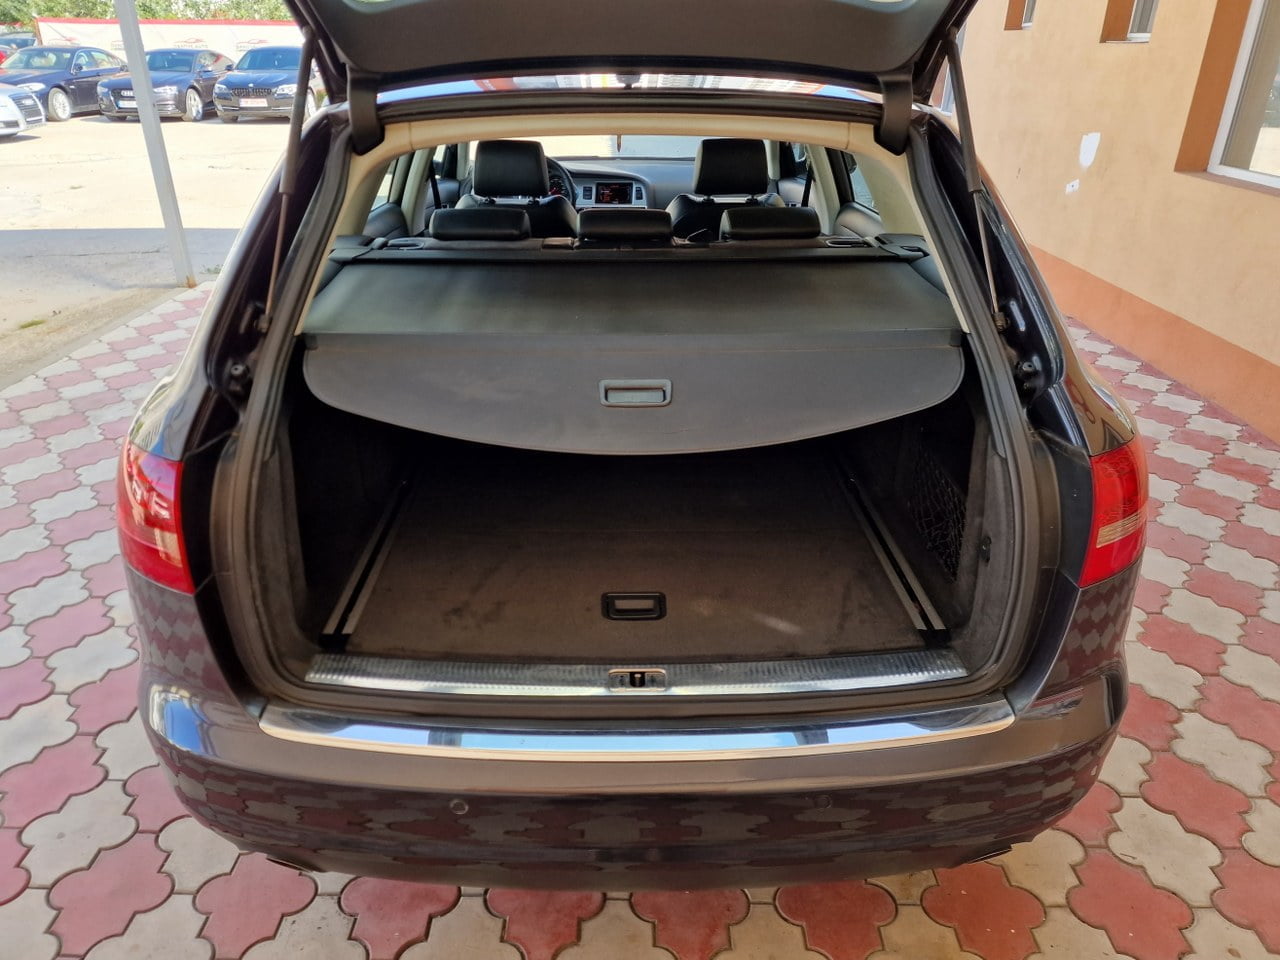 Locatie Timisoara – Audi A6 in RATE FIXE, Livrare GRATUITA, 12 Luni GARANTIE full